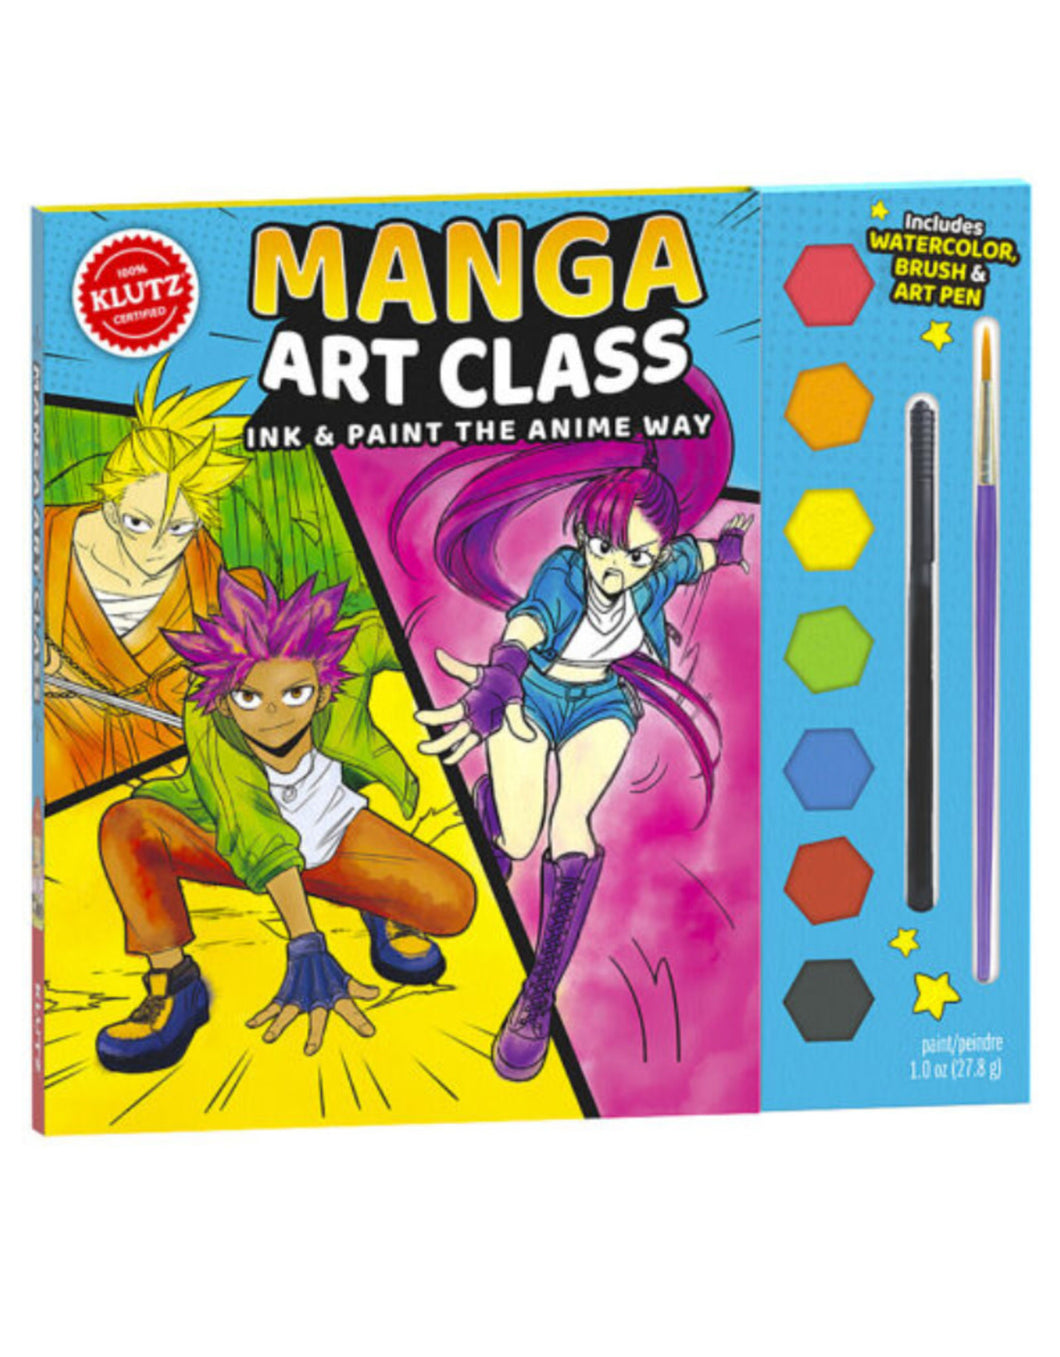 Manga Art Class: Ink & Paint the Anime Way